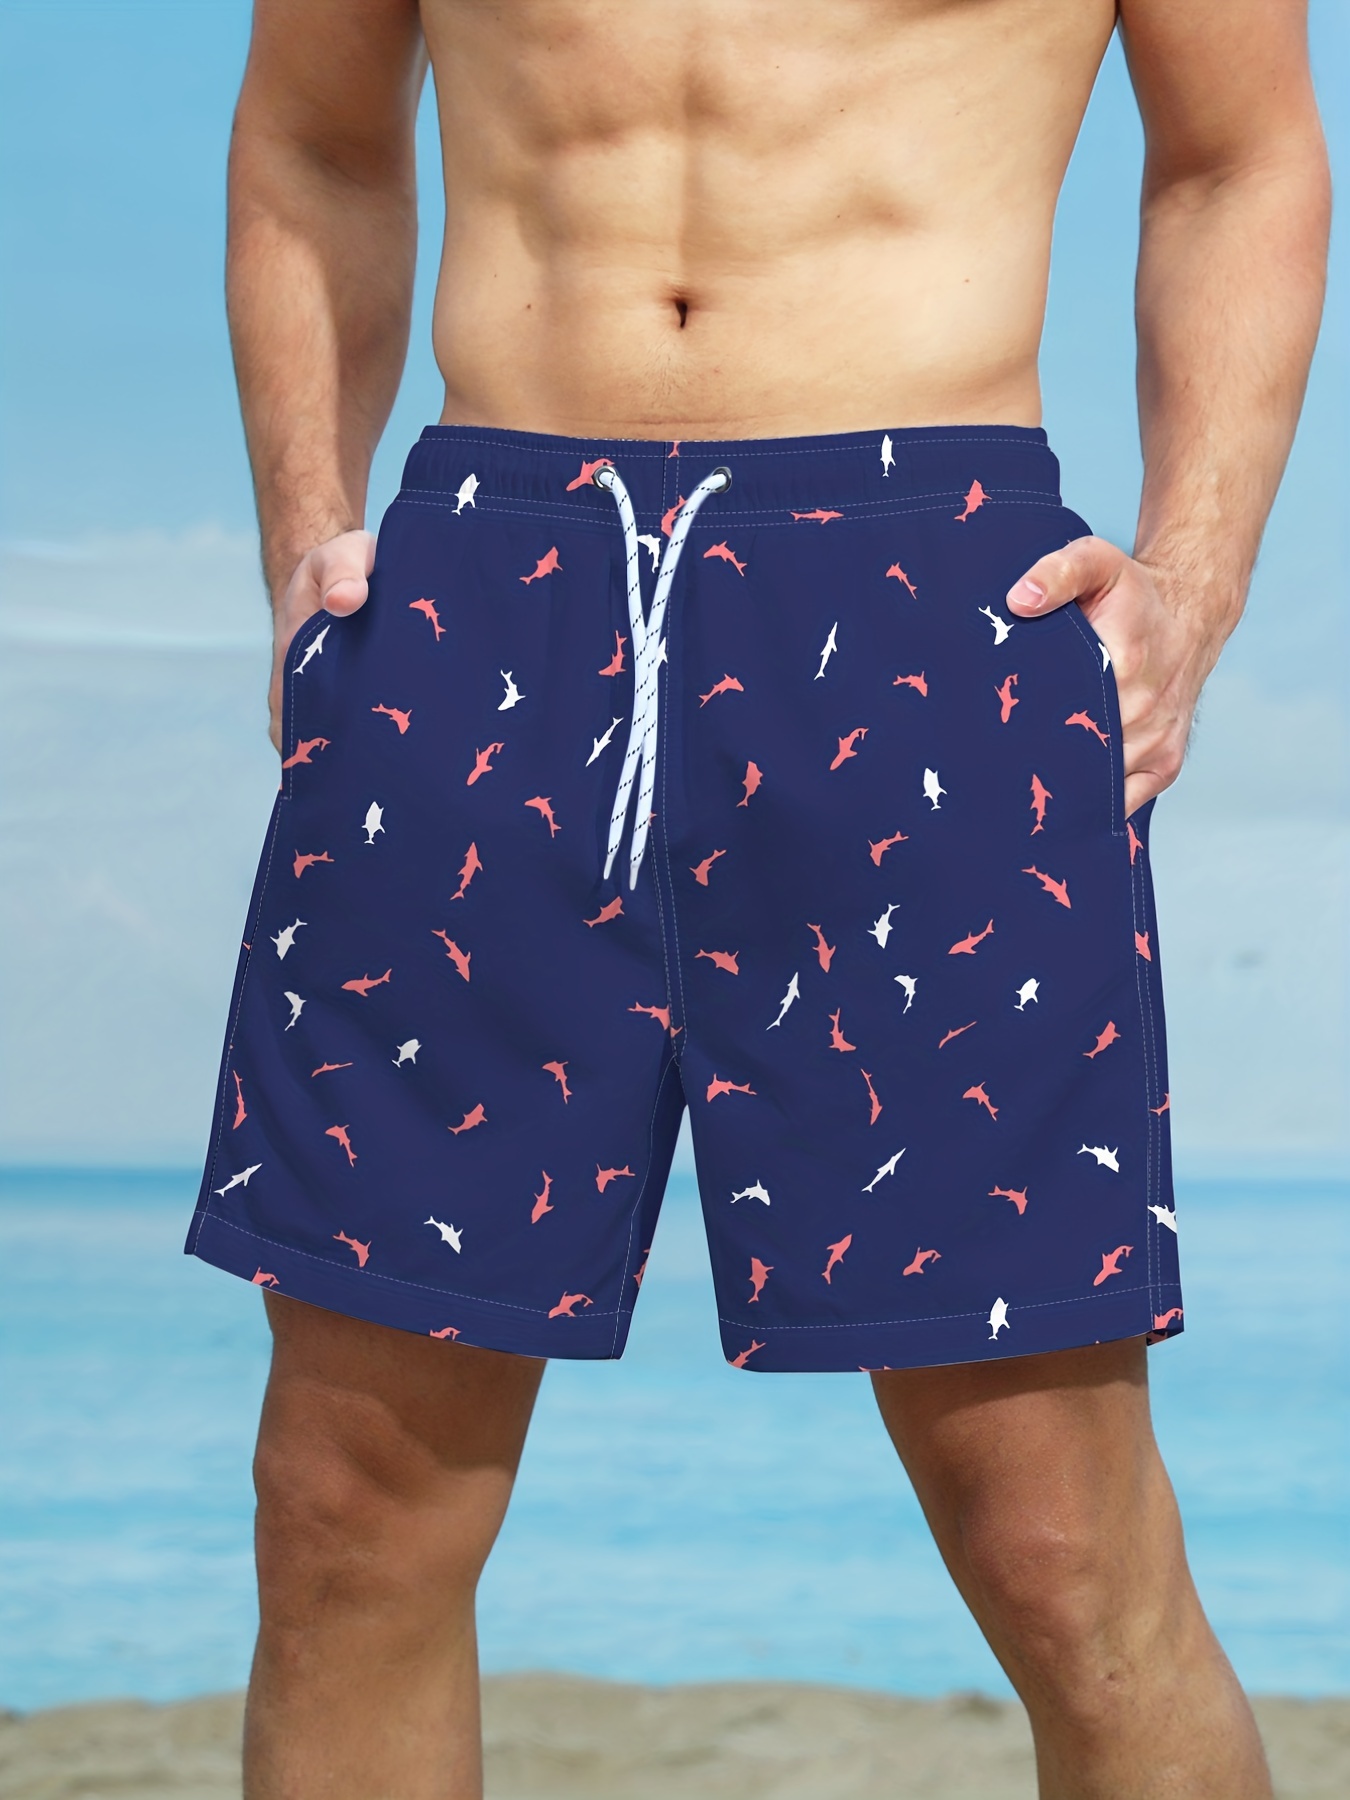 Trendy Cartoon Fish Pattern Print Men's Swim Trunks Quick Dry Drawstring Beach Shorts Men's Pants Swimwear For Summer Beach Poo